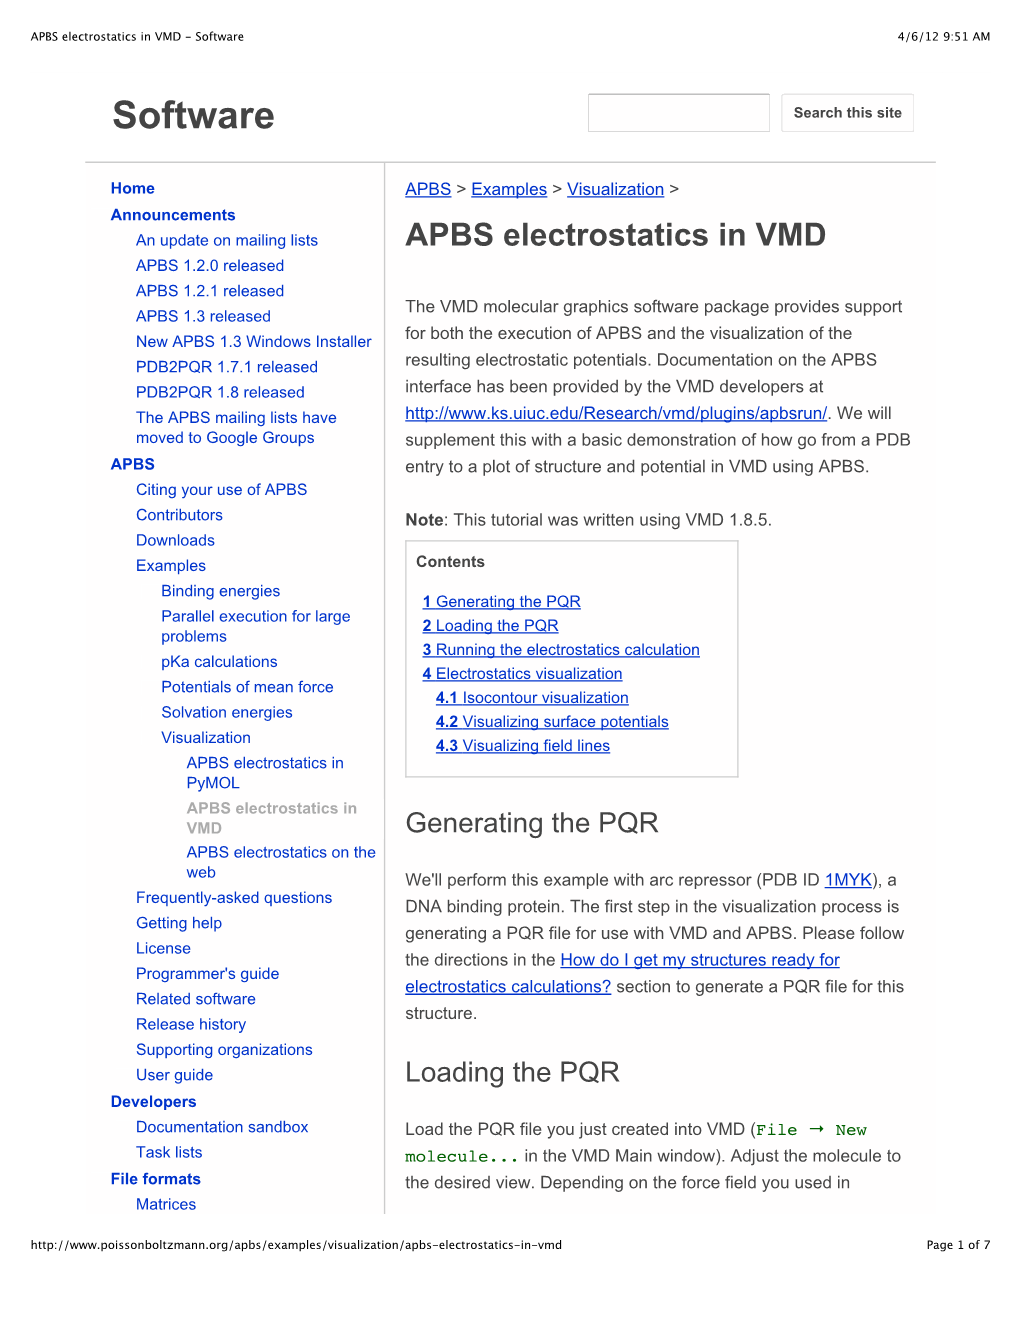 APBS Electrostatics in VMD - Software 4/6/12 9:51 AM